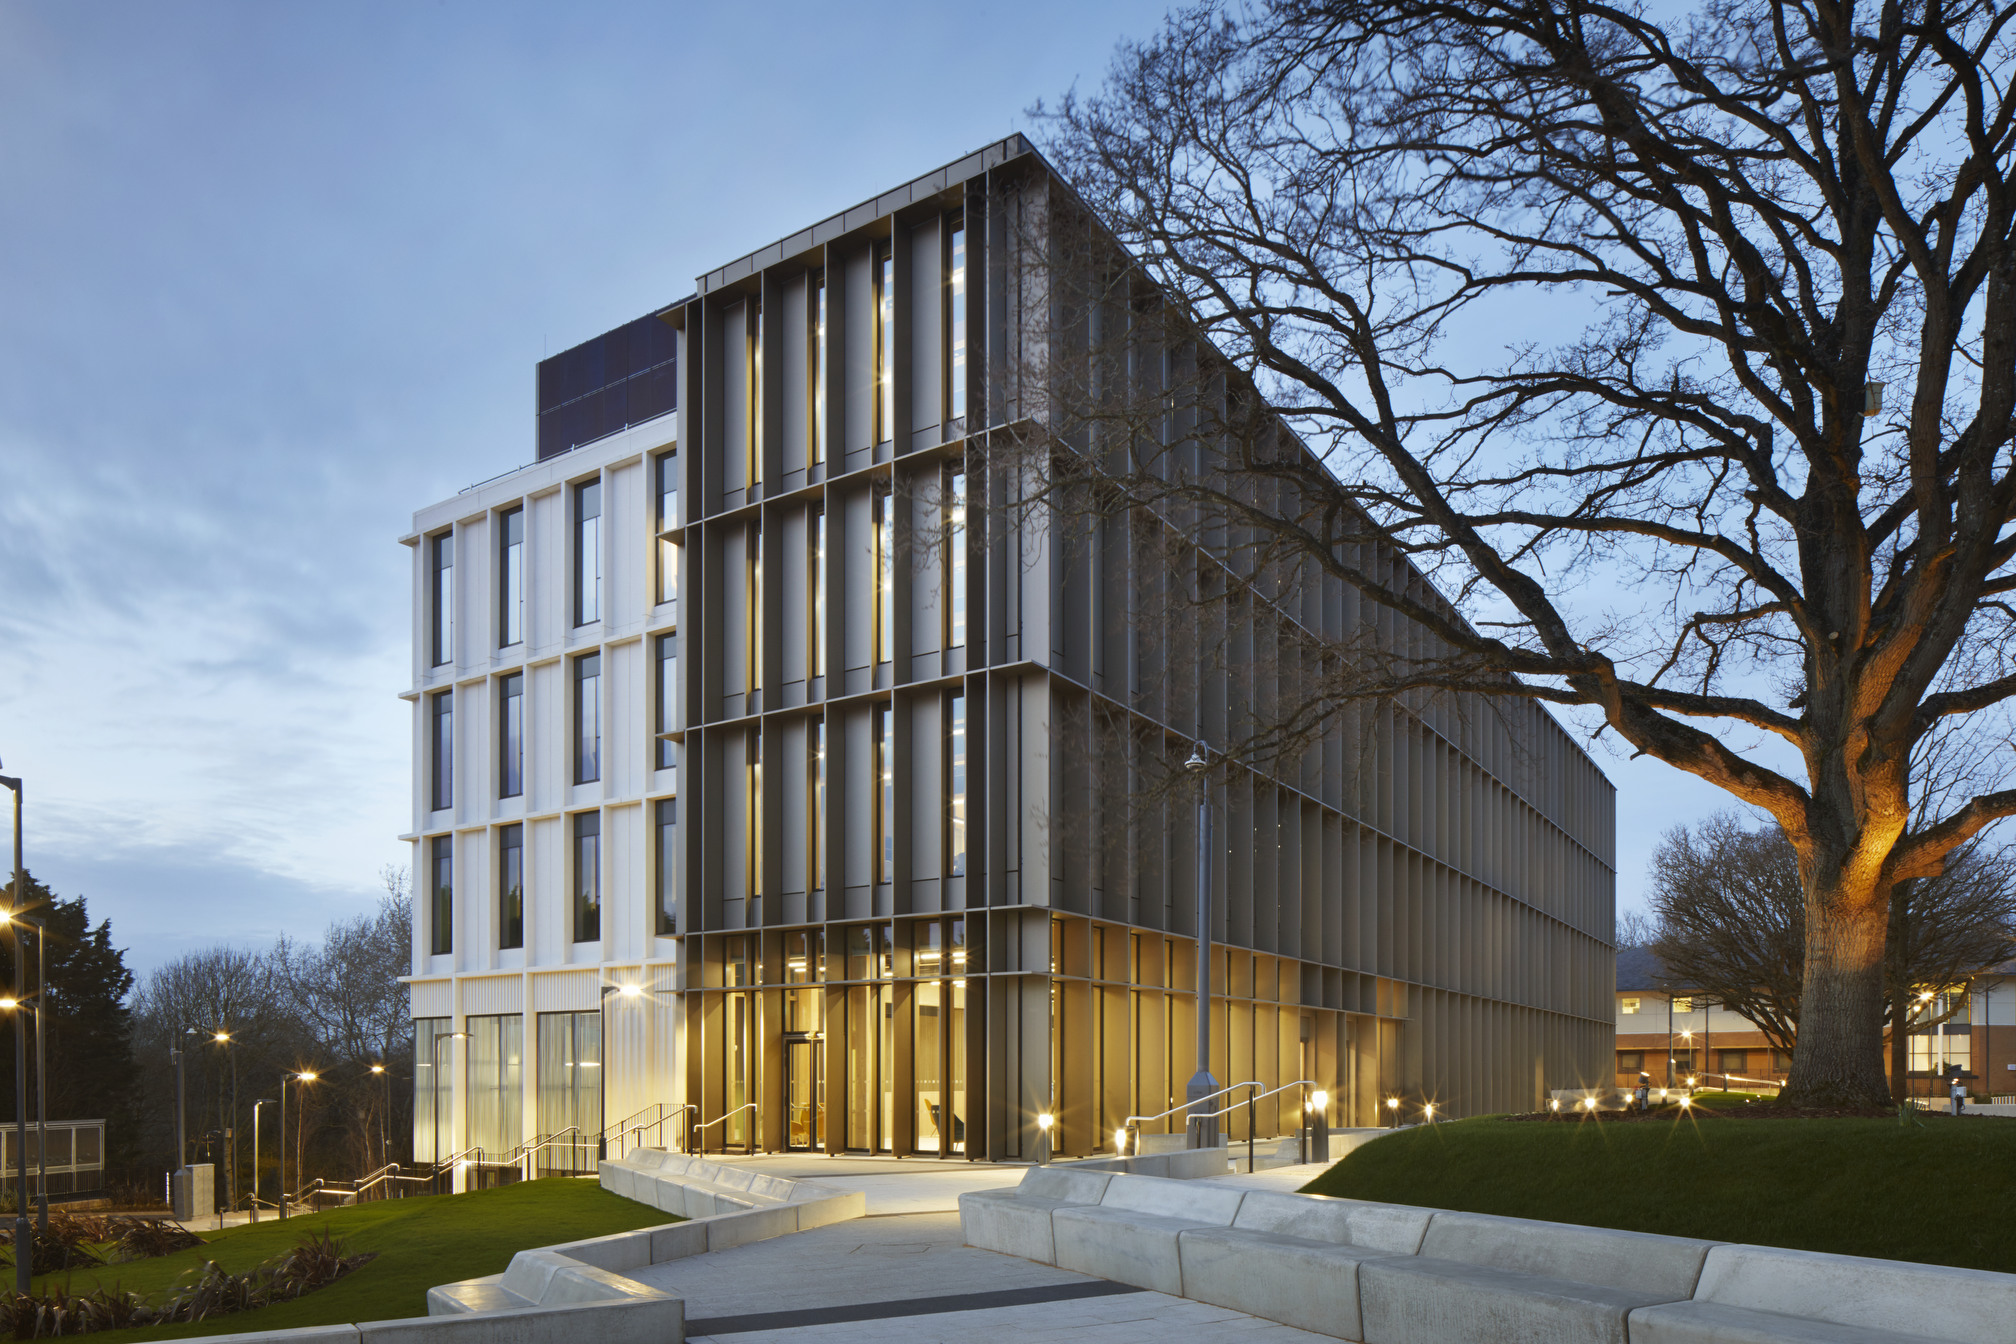 University of Warwick’s Interdisciplinary Biomedical Research Building by Willmott Dixon using Powerproject by Elecosoft